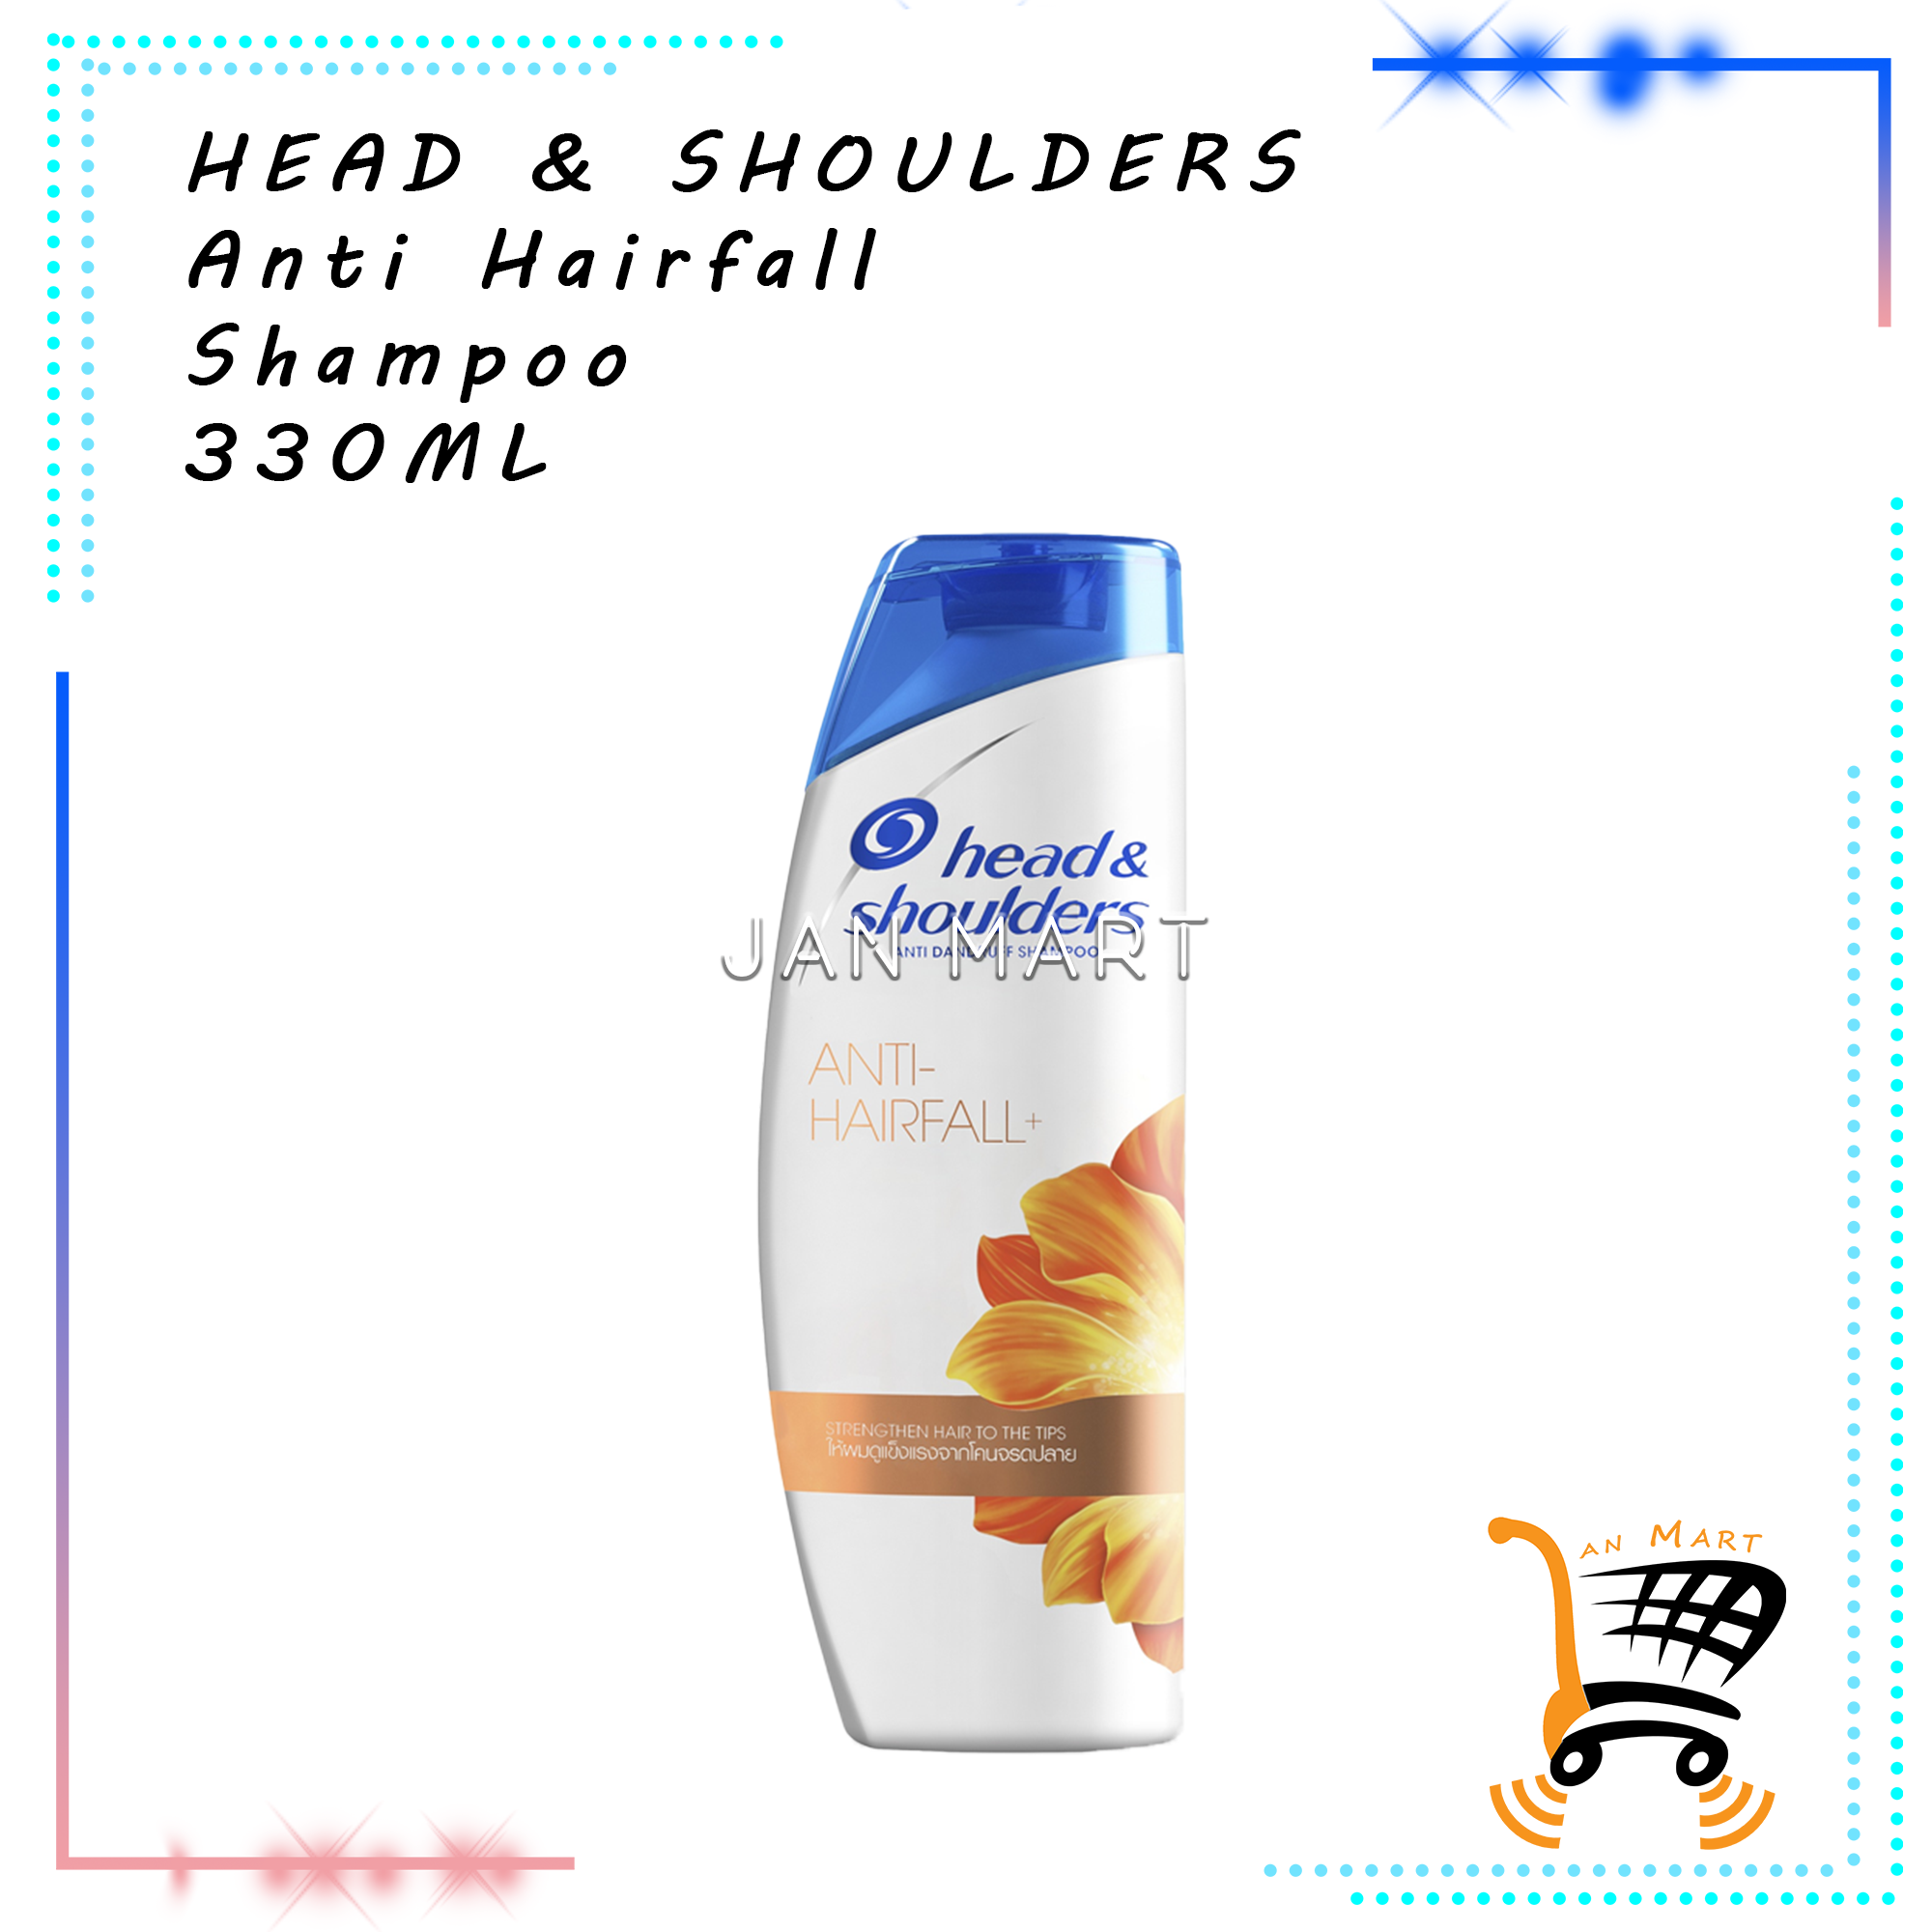 HEAD & SHOULDERS Shampoo 330ML